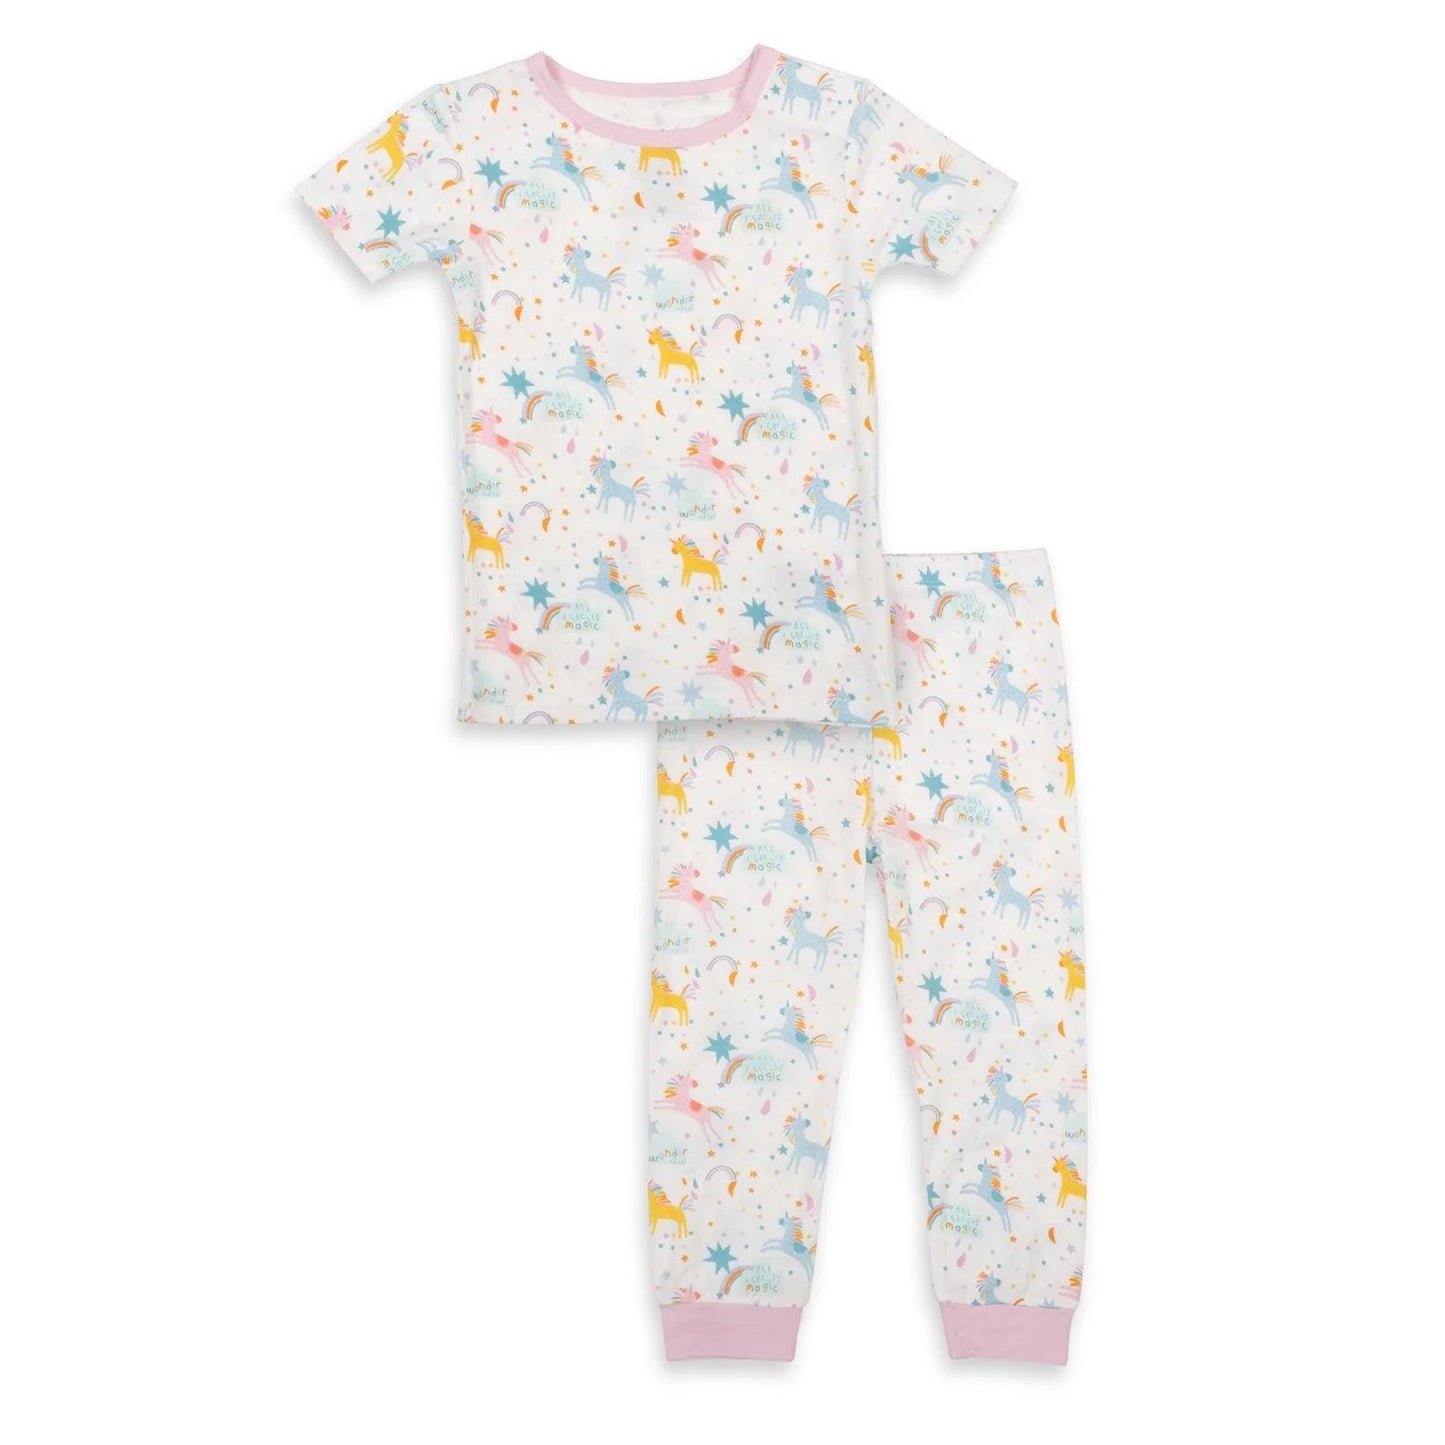 2 Piece Pajama (Short Sleeve) - Magic Glitter Sparkle